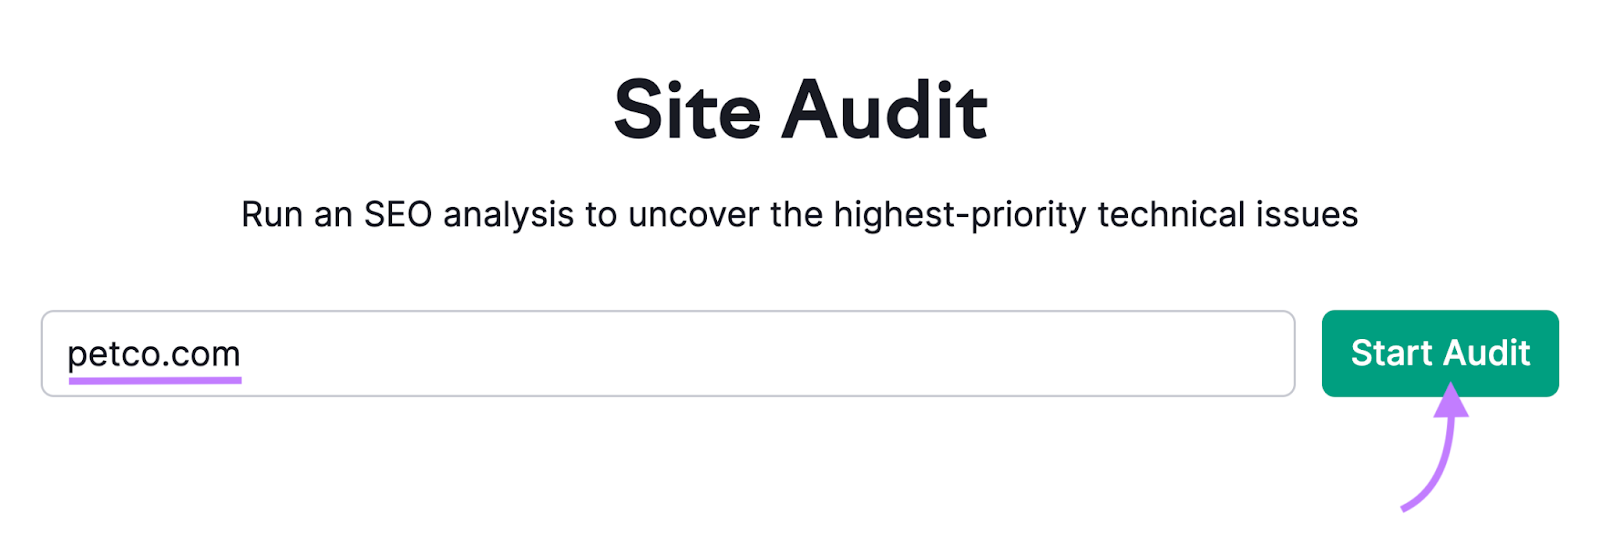 "petco.com" entered into the Site Audit tool